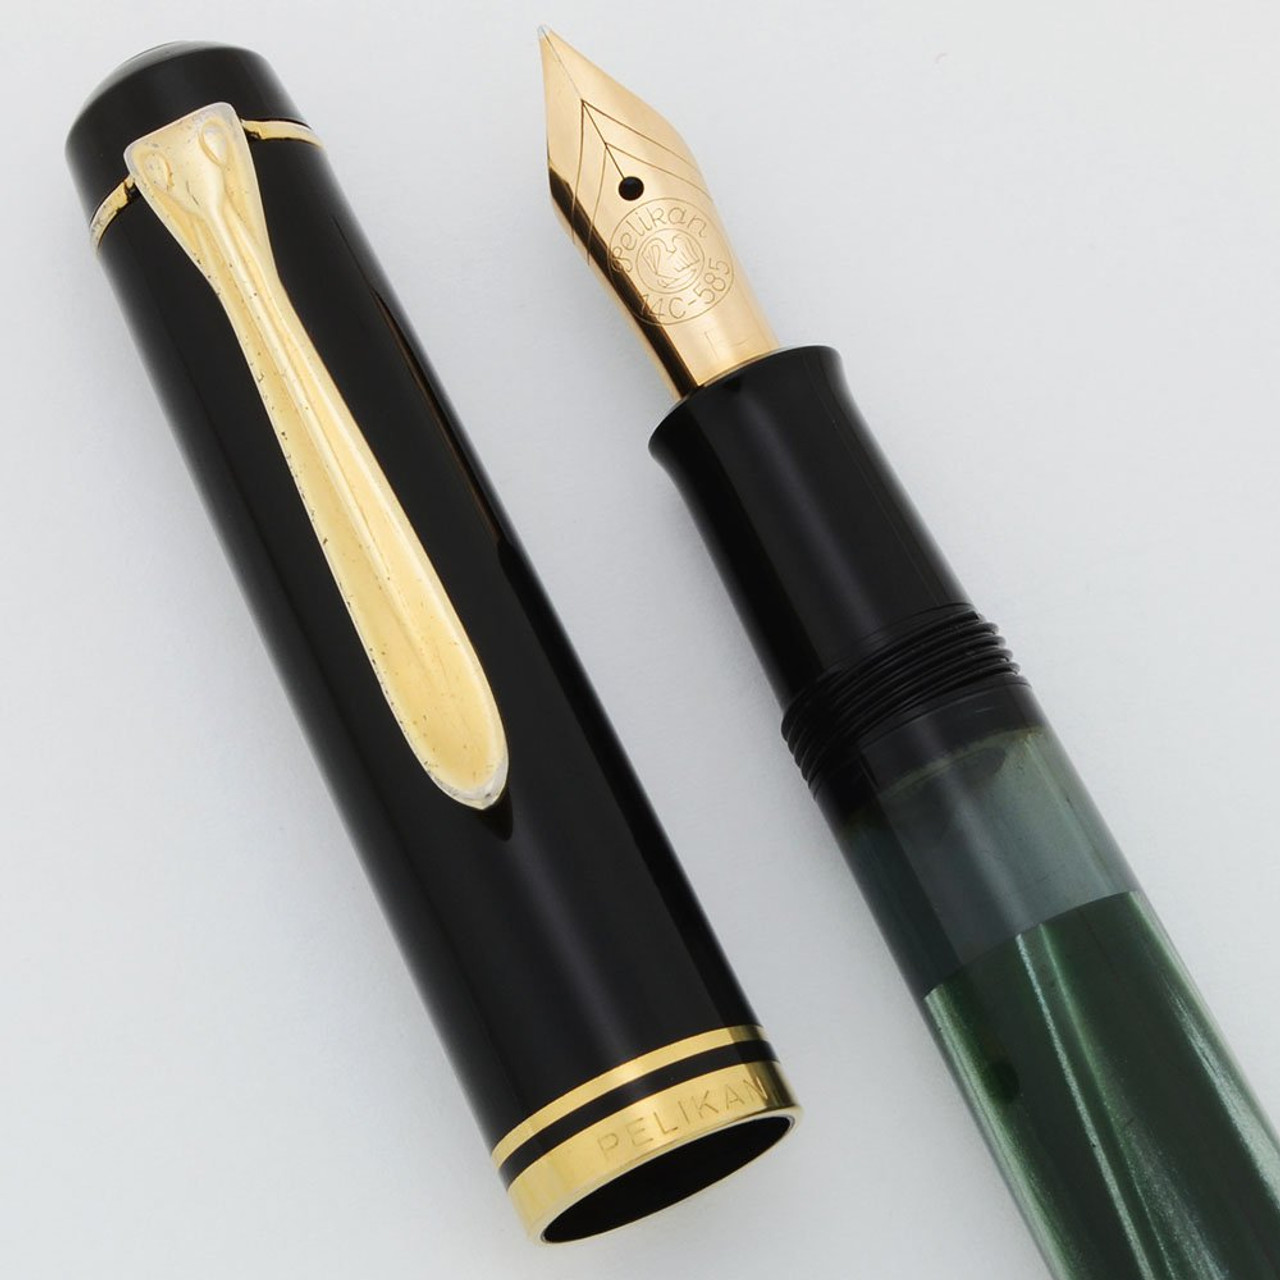 Pelikan M250 Fountain Pen - Old Style, Black, Gold Plated Trim, 14k Fine Semi-Flex Nib (Excellent +, Works Well)